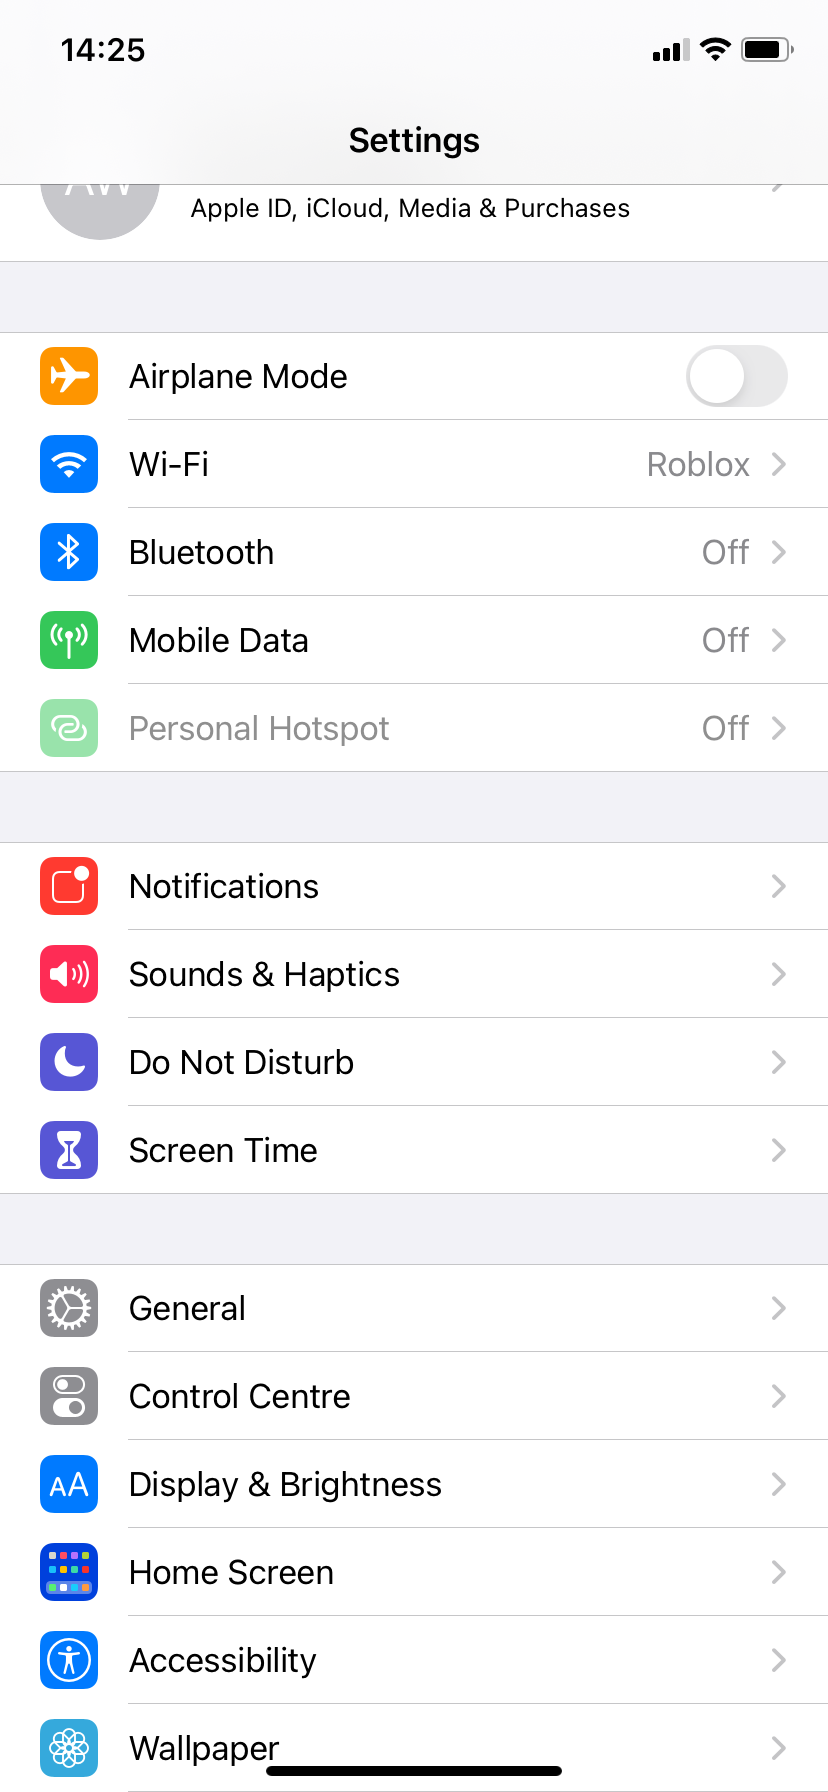 Inside the Settings app in iOS